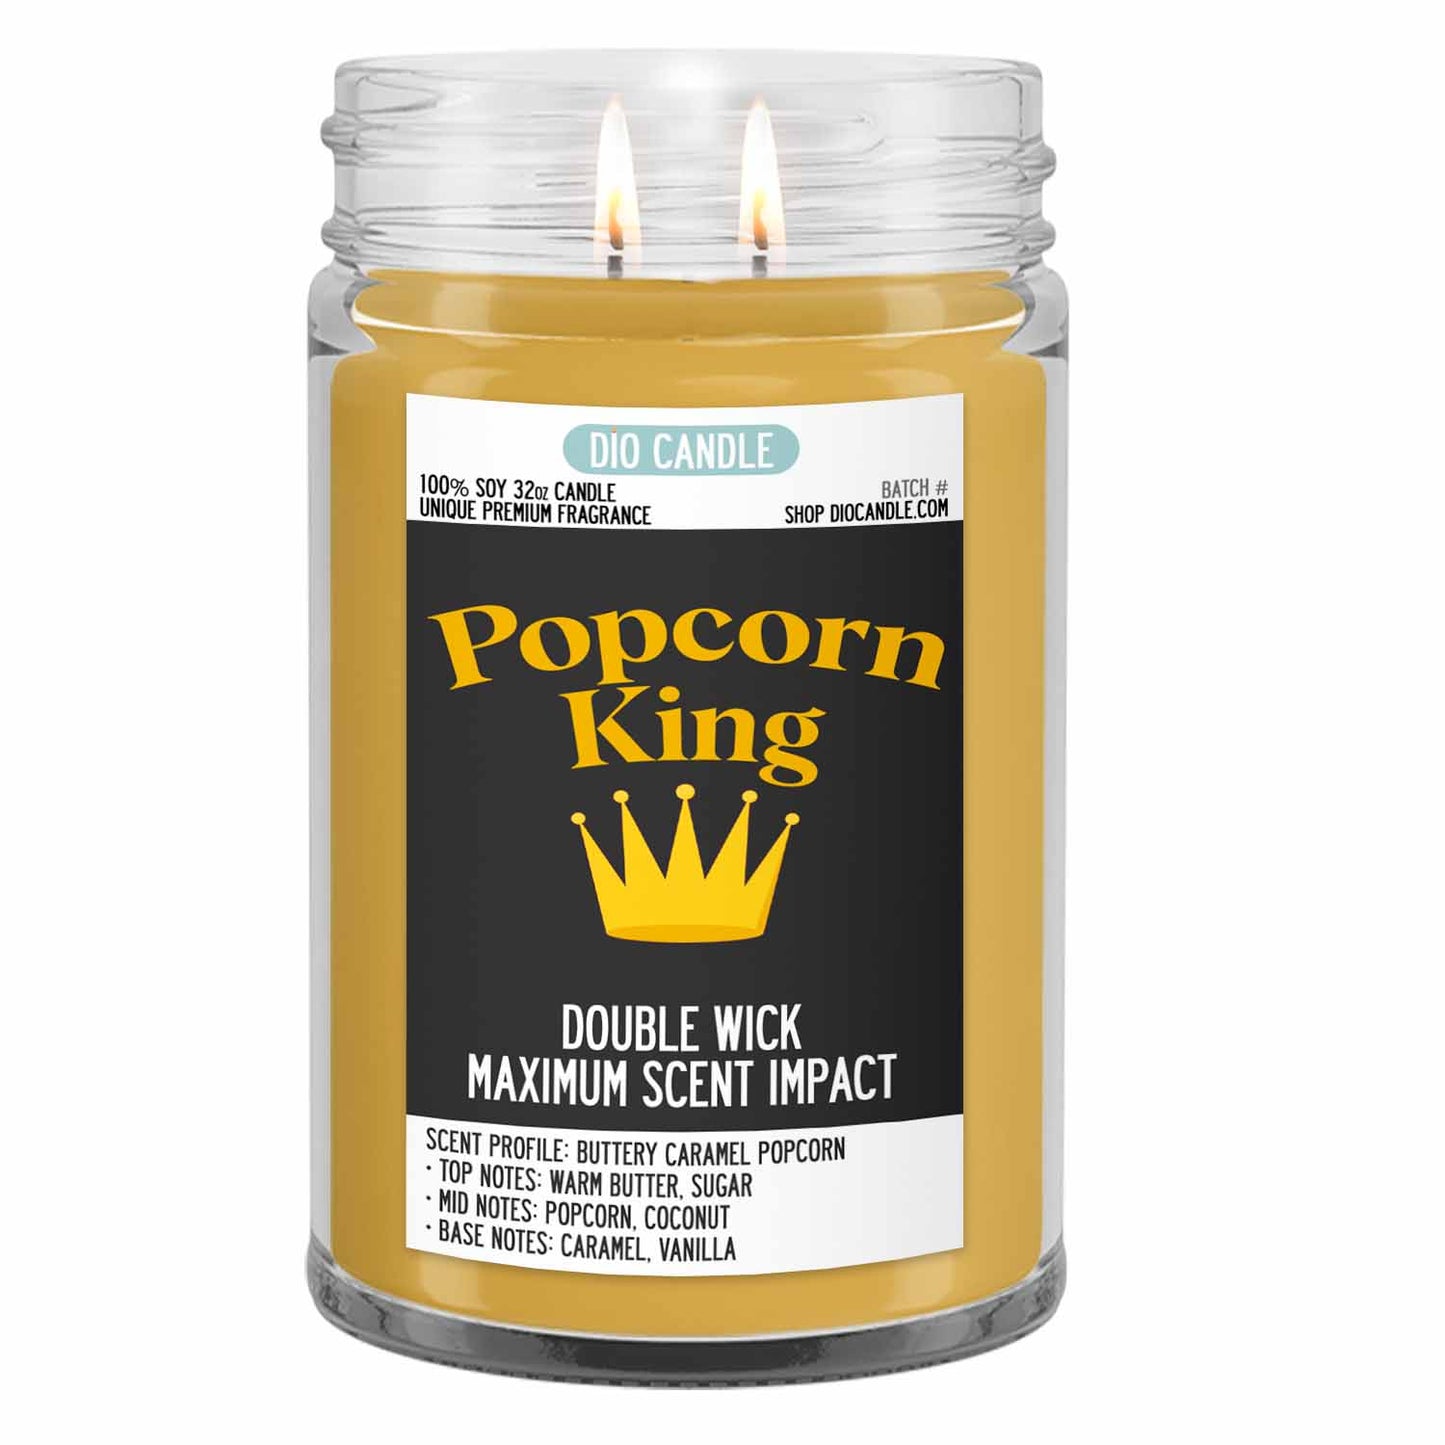 Popcorn King Candle